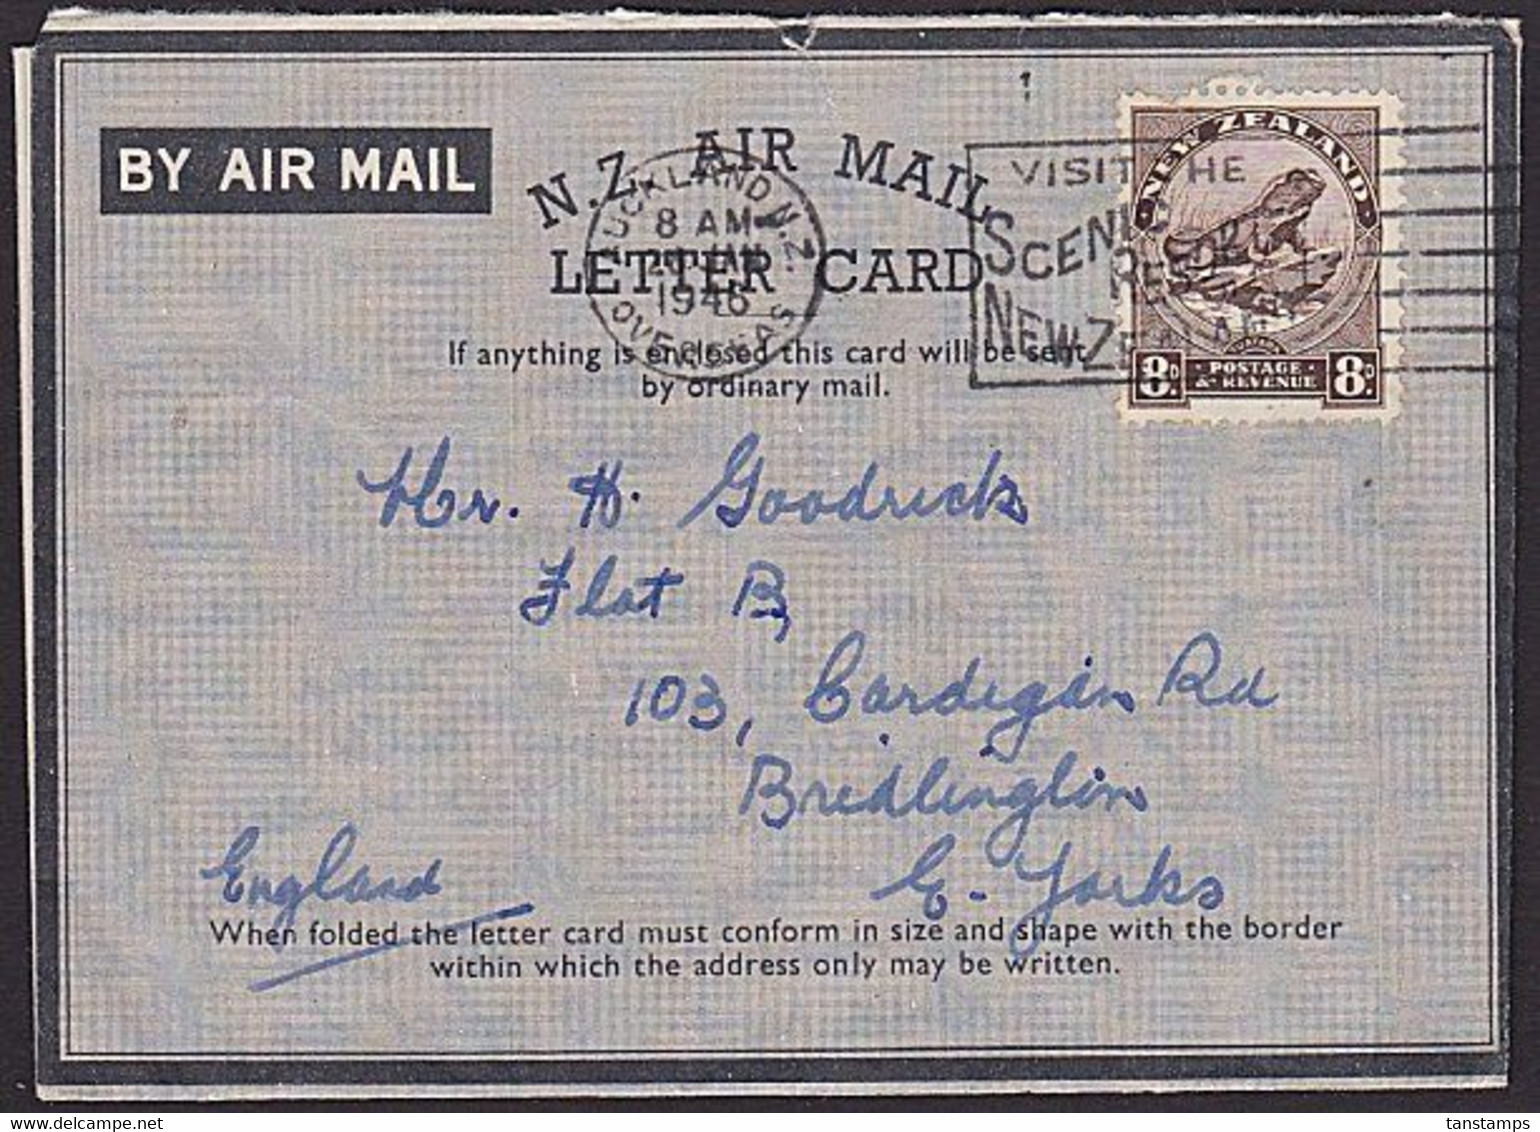 NEW ZEALAND AEROGRAM LETTER CARD TUATARA 8d RATE TO UK TOURIST SLOGAN 1946 - Covers & Documents